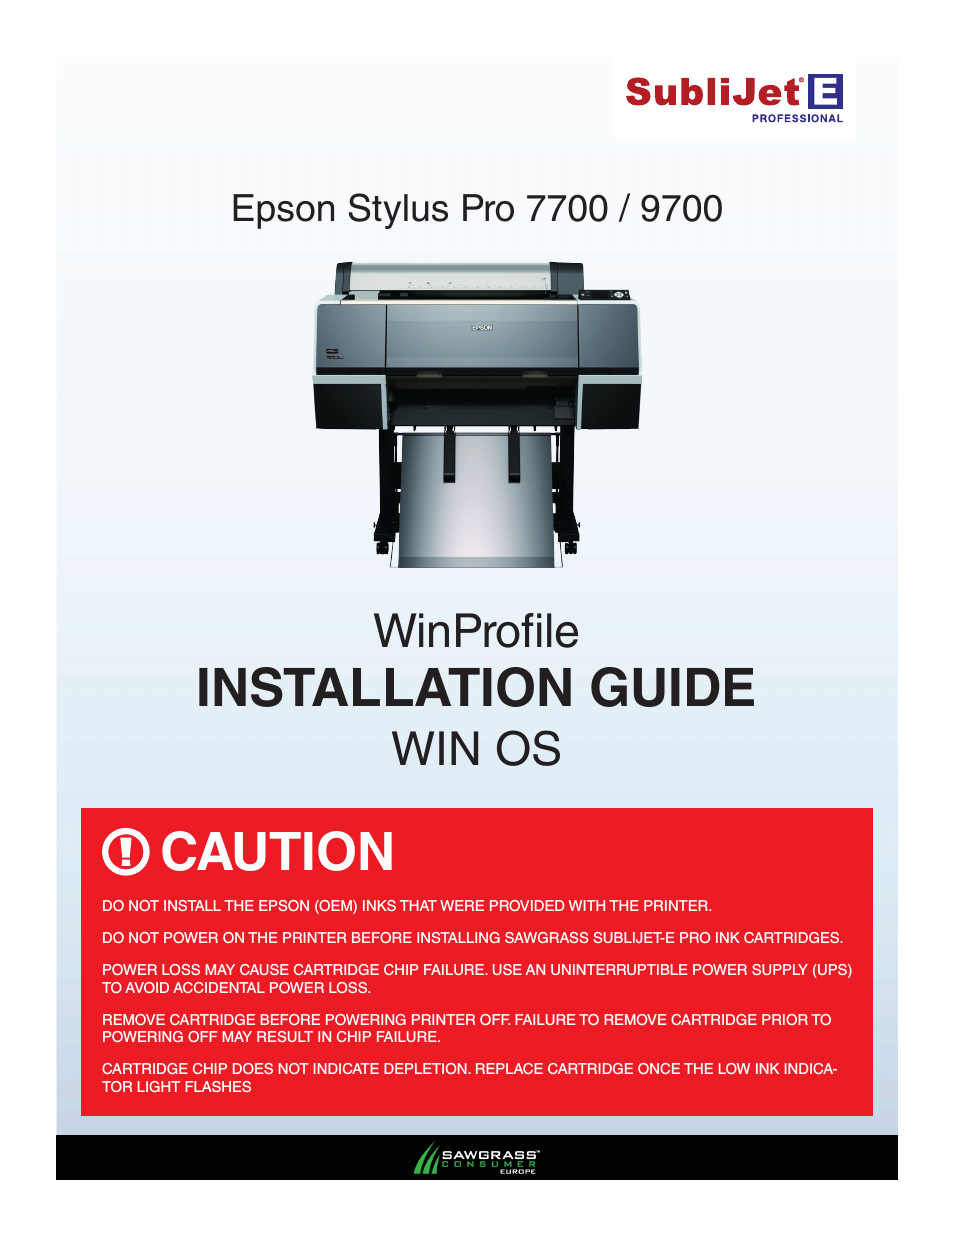 SubliJet E Epson Stylus Pro 7900 (Windows ICC Profile Setup): Printer/Profile Installation Guide